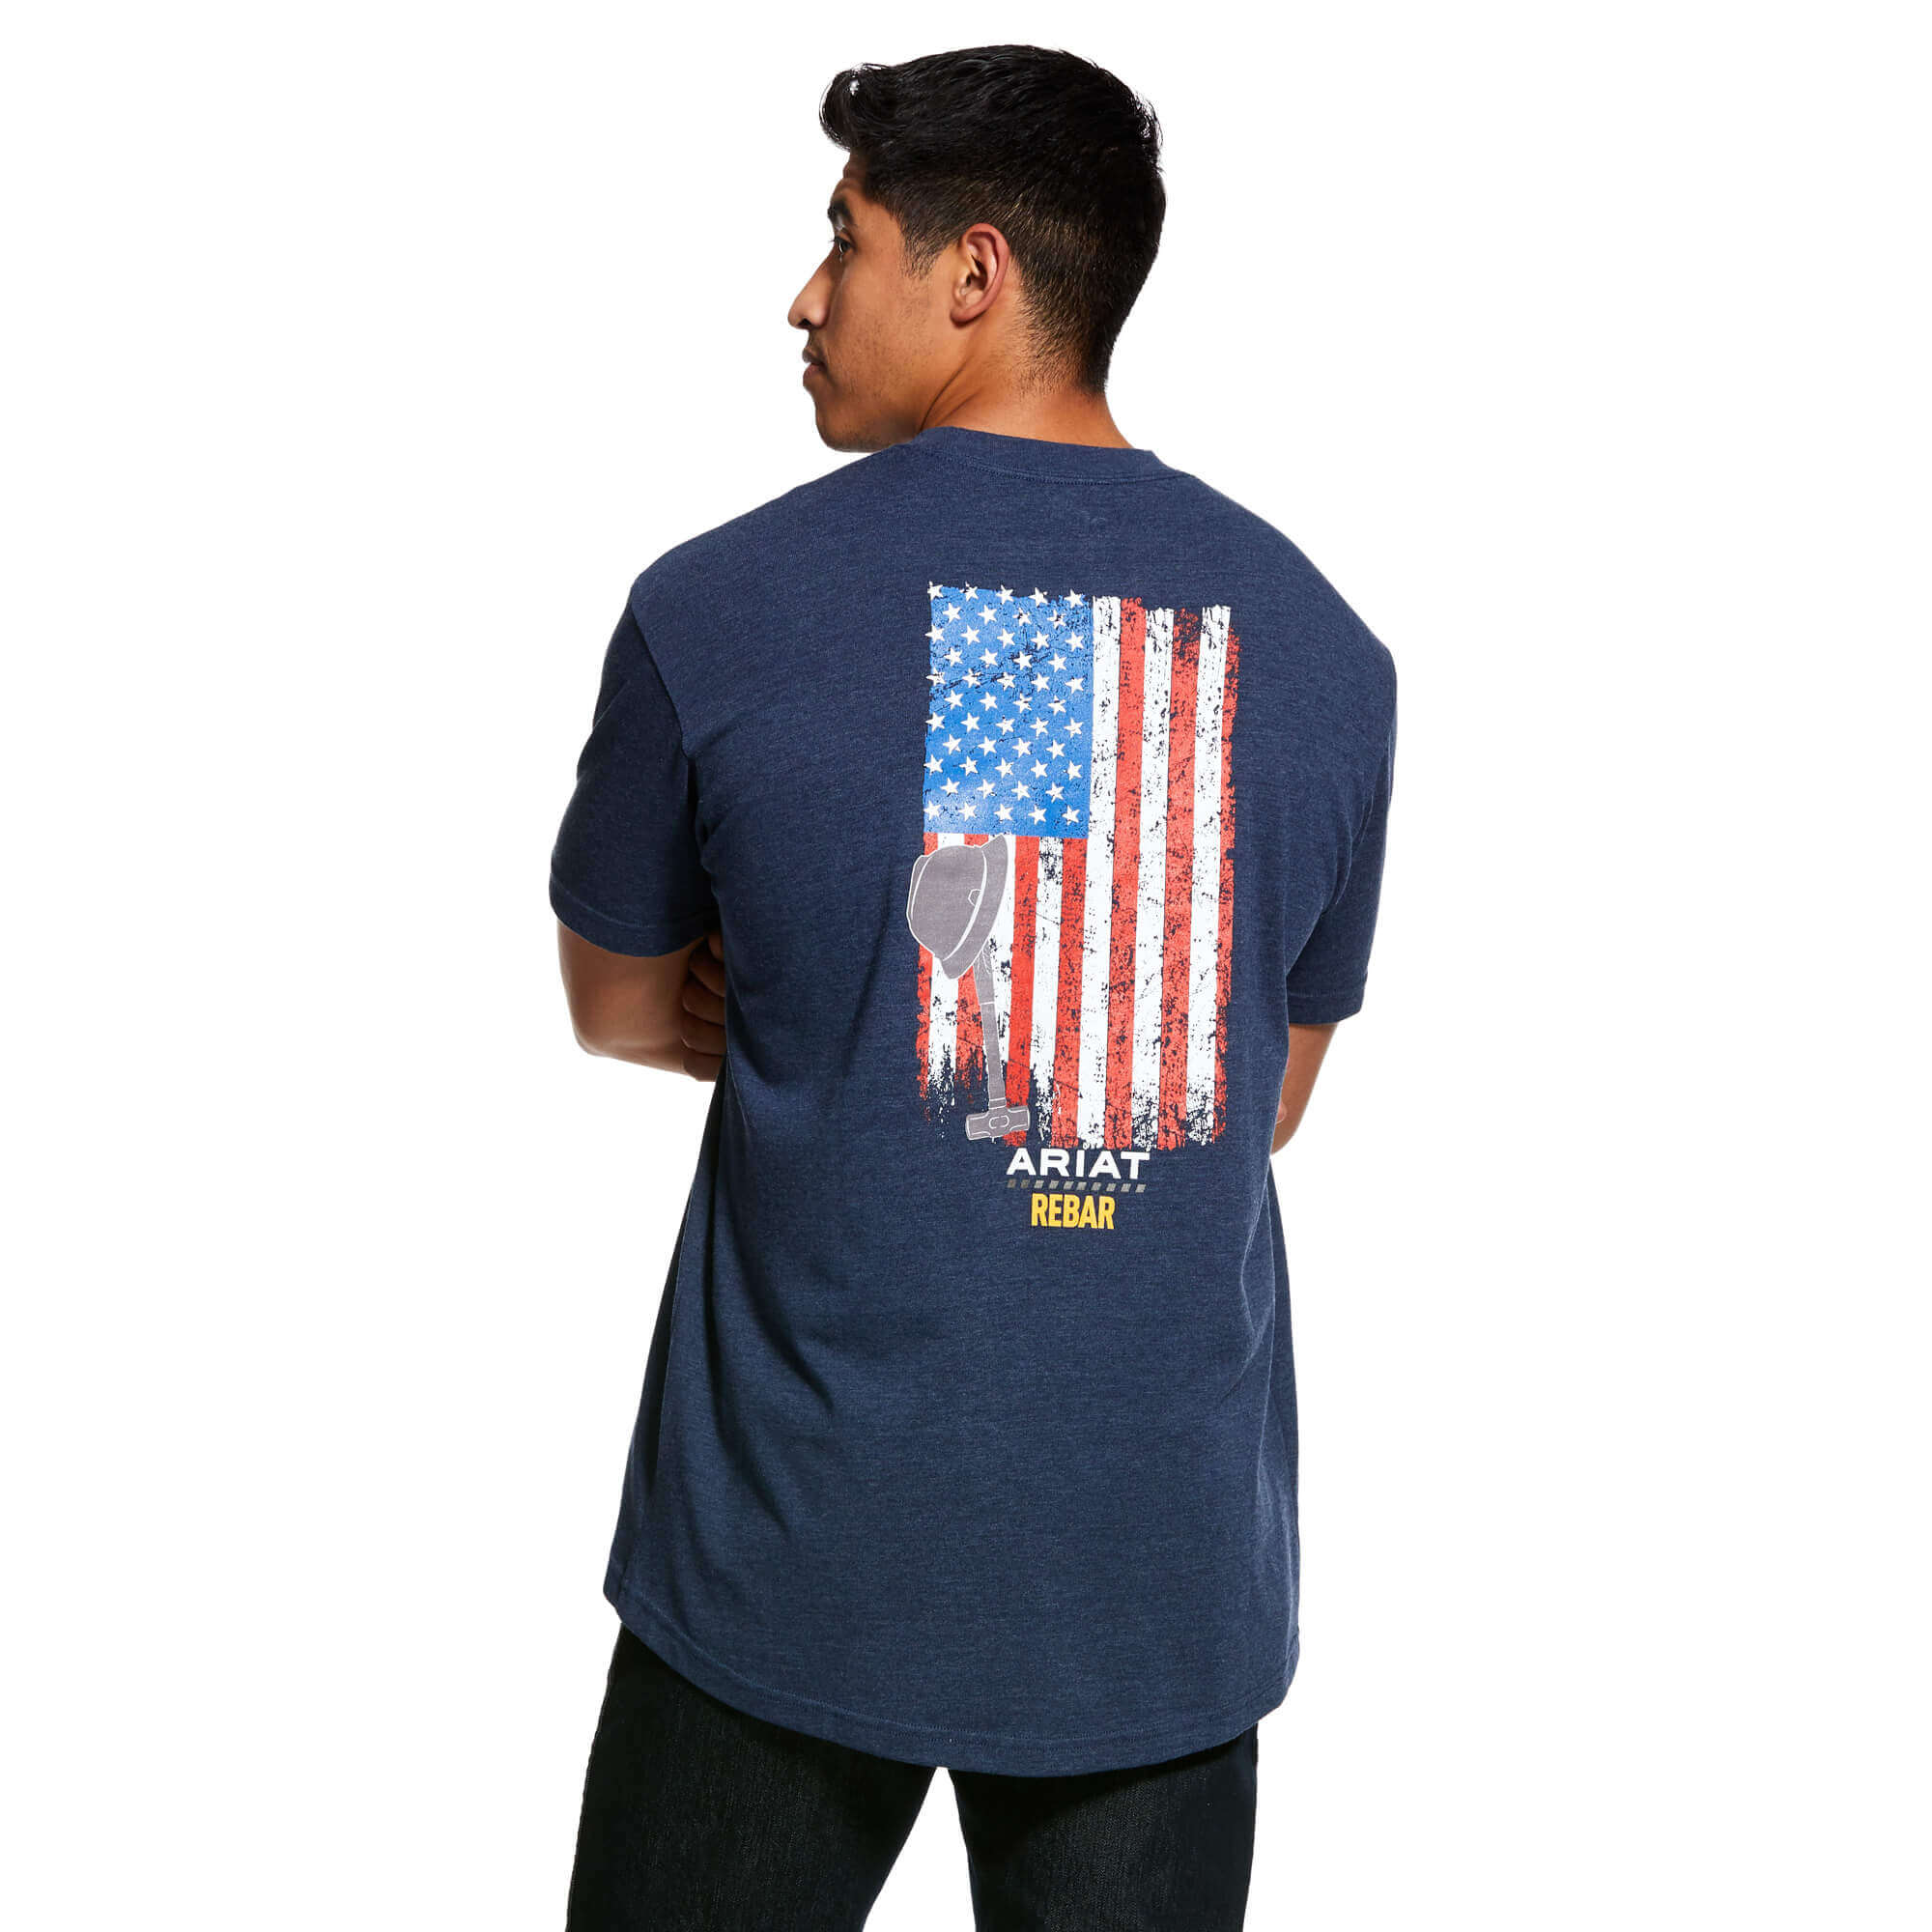 Ariat Rebar Cotton Strong American Grit T-Shirt